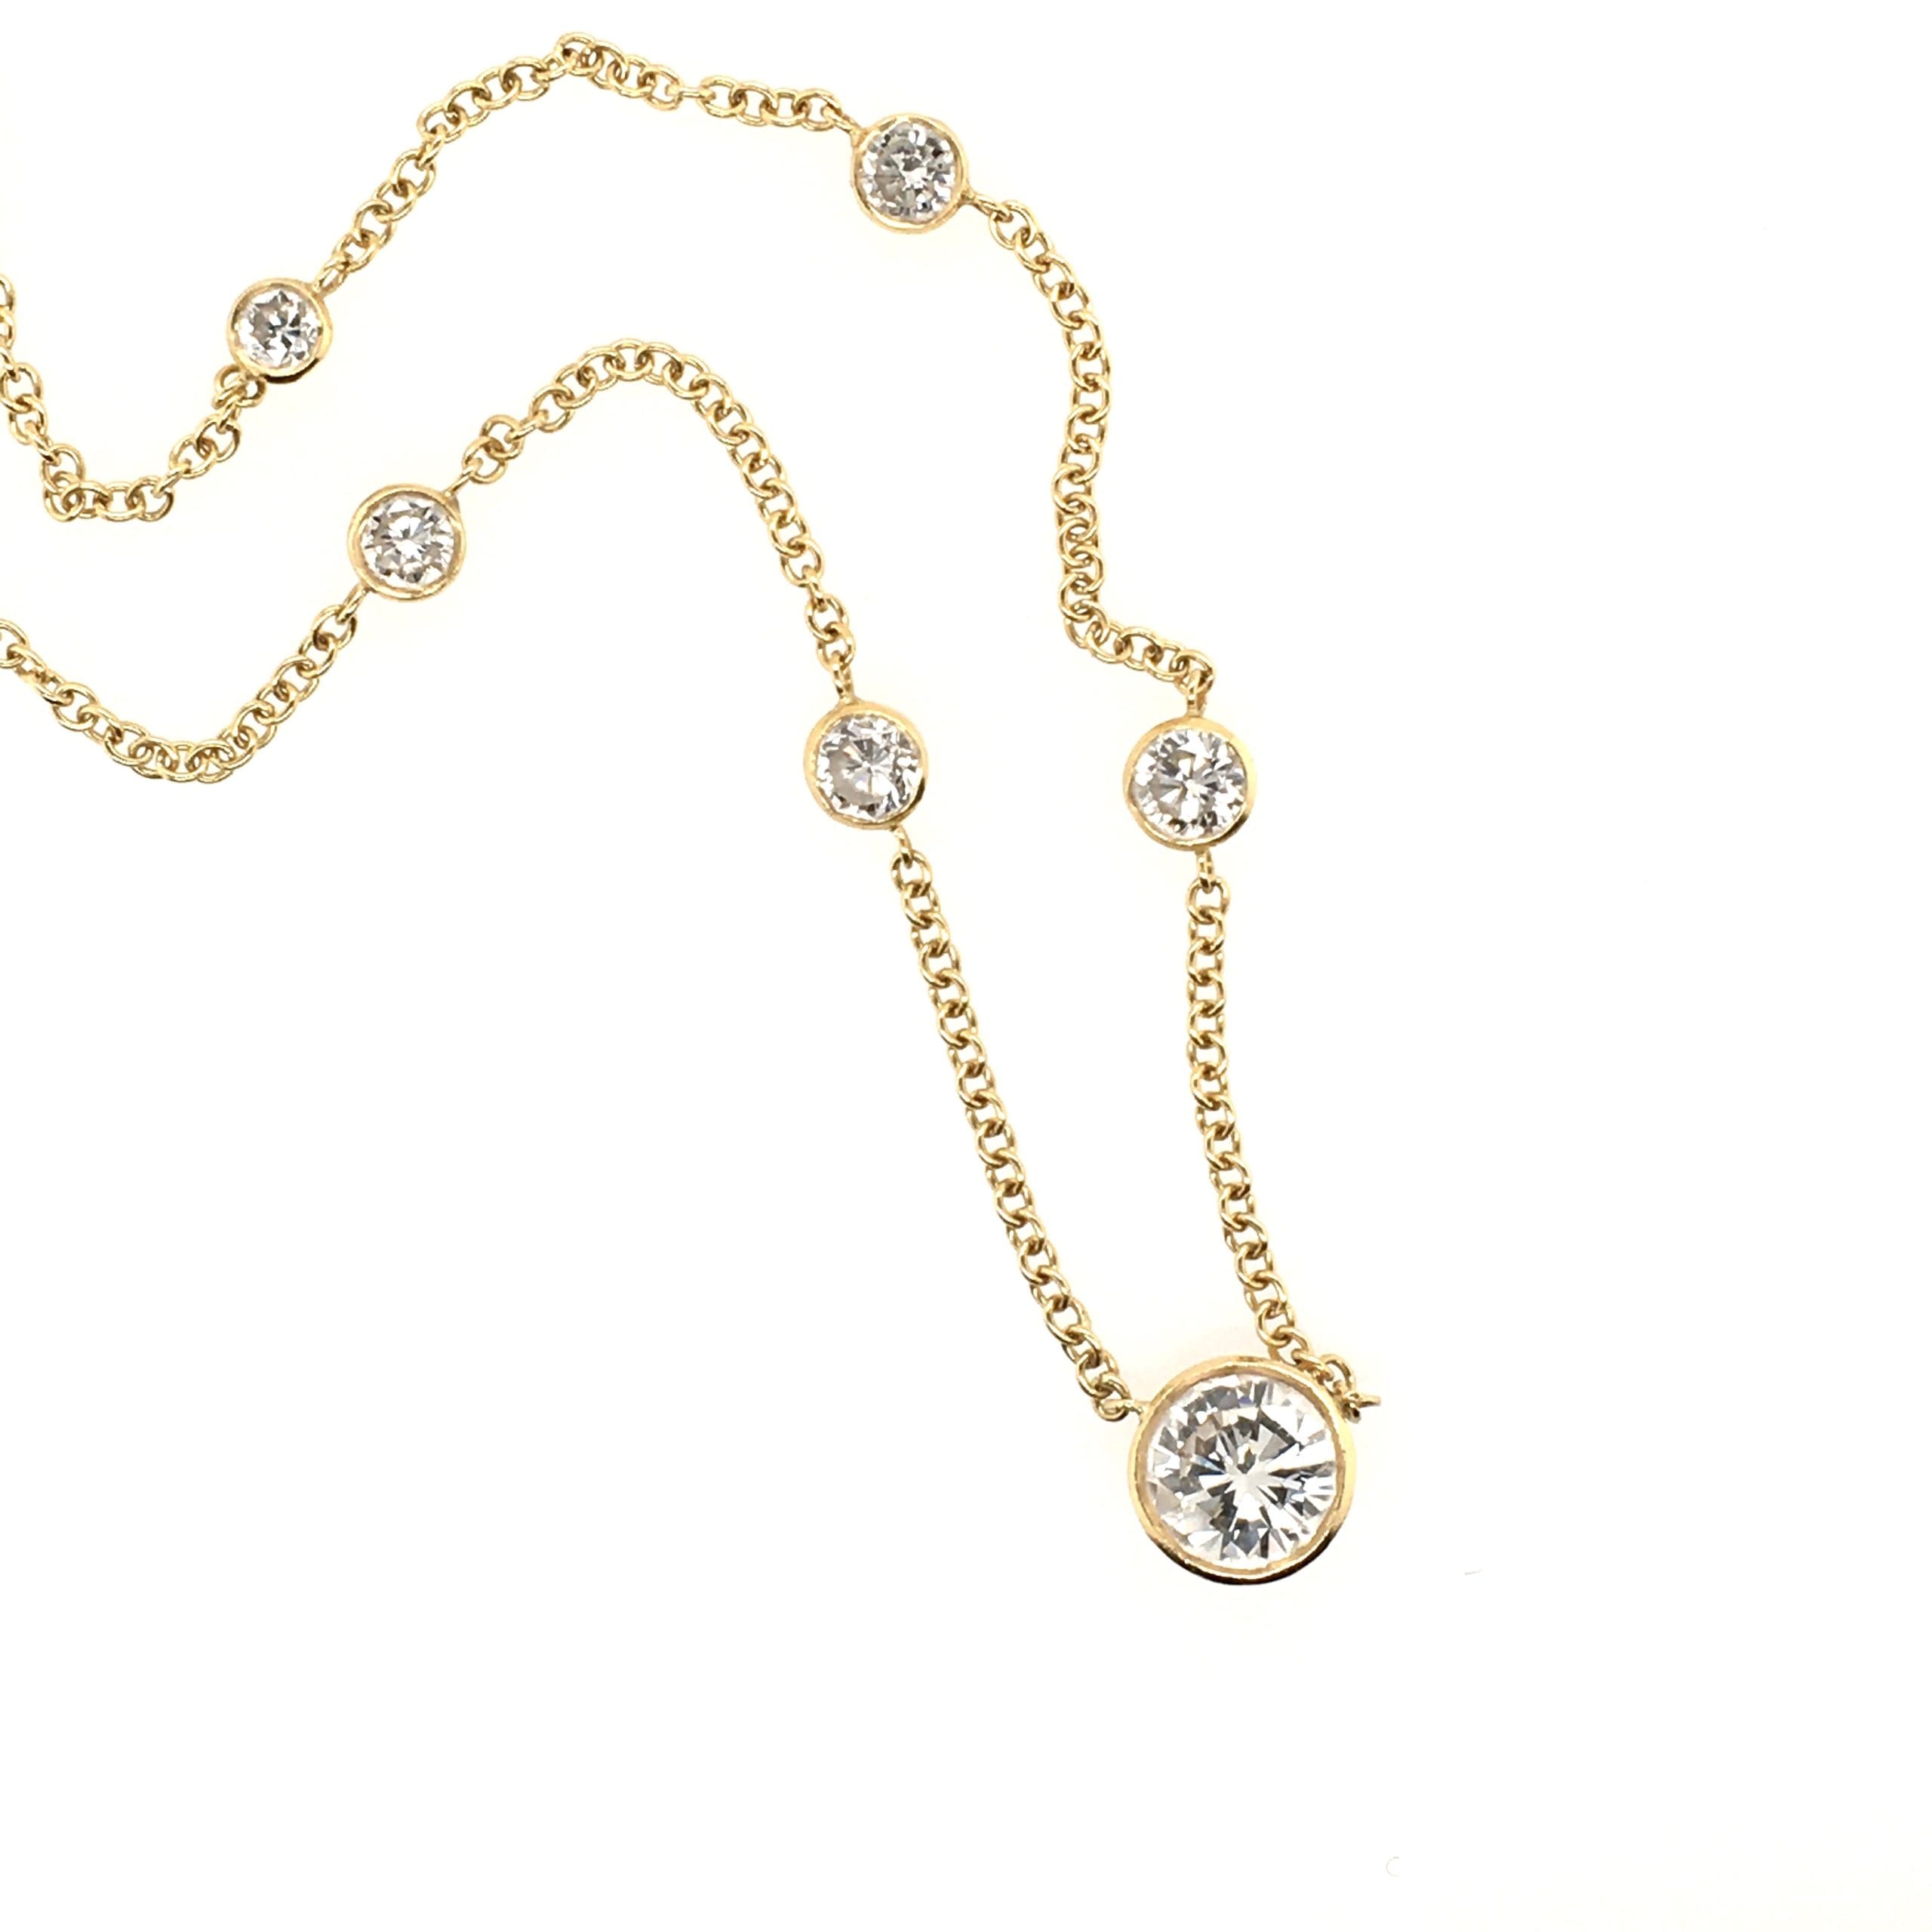 Gold and Diamond Link Necklace | $0 CDB Jewelry